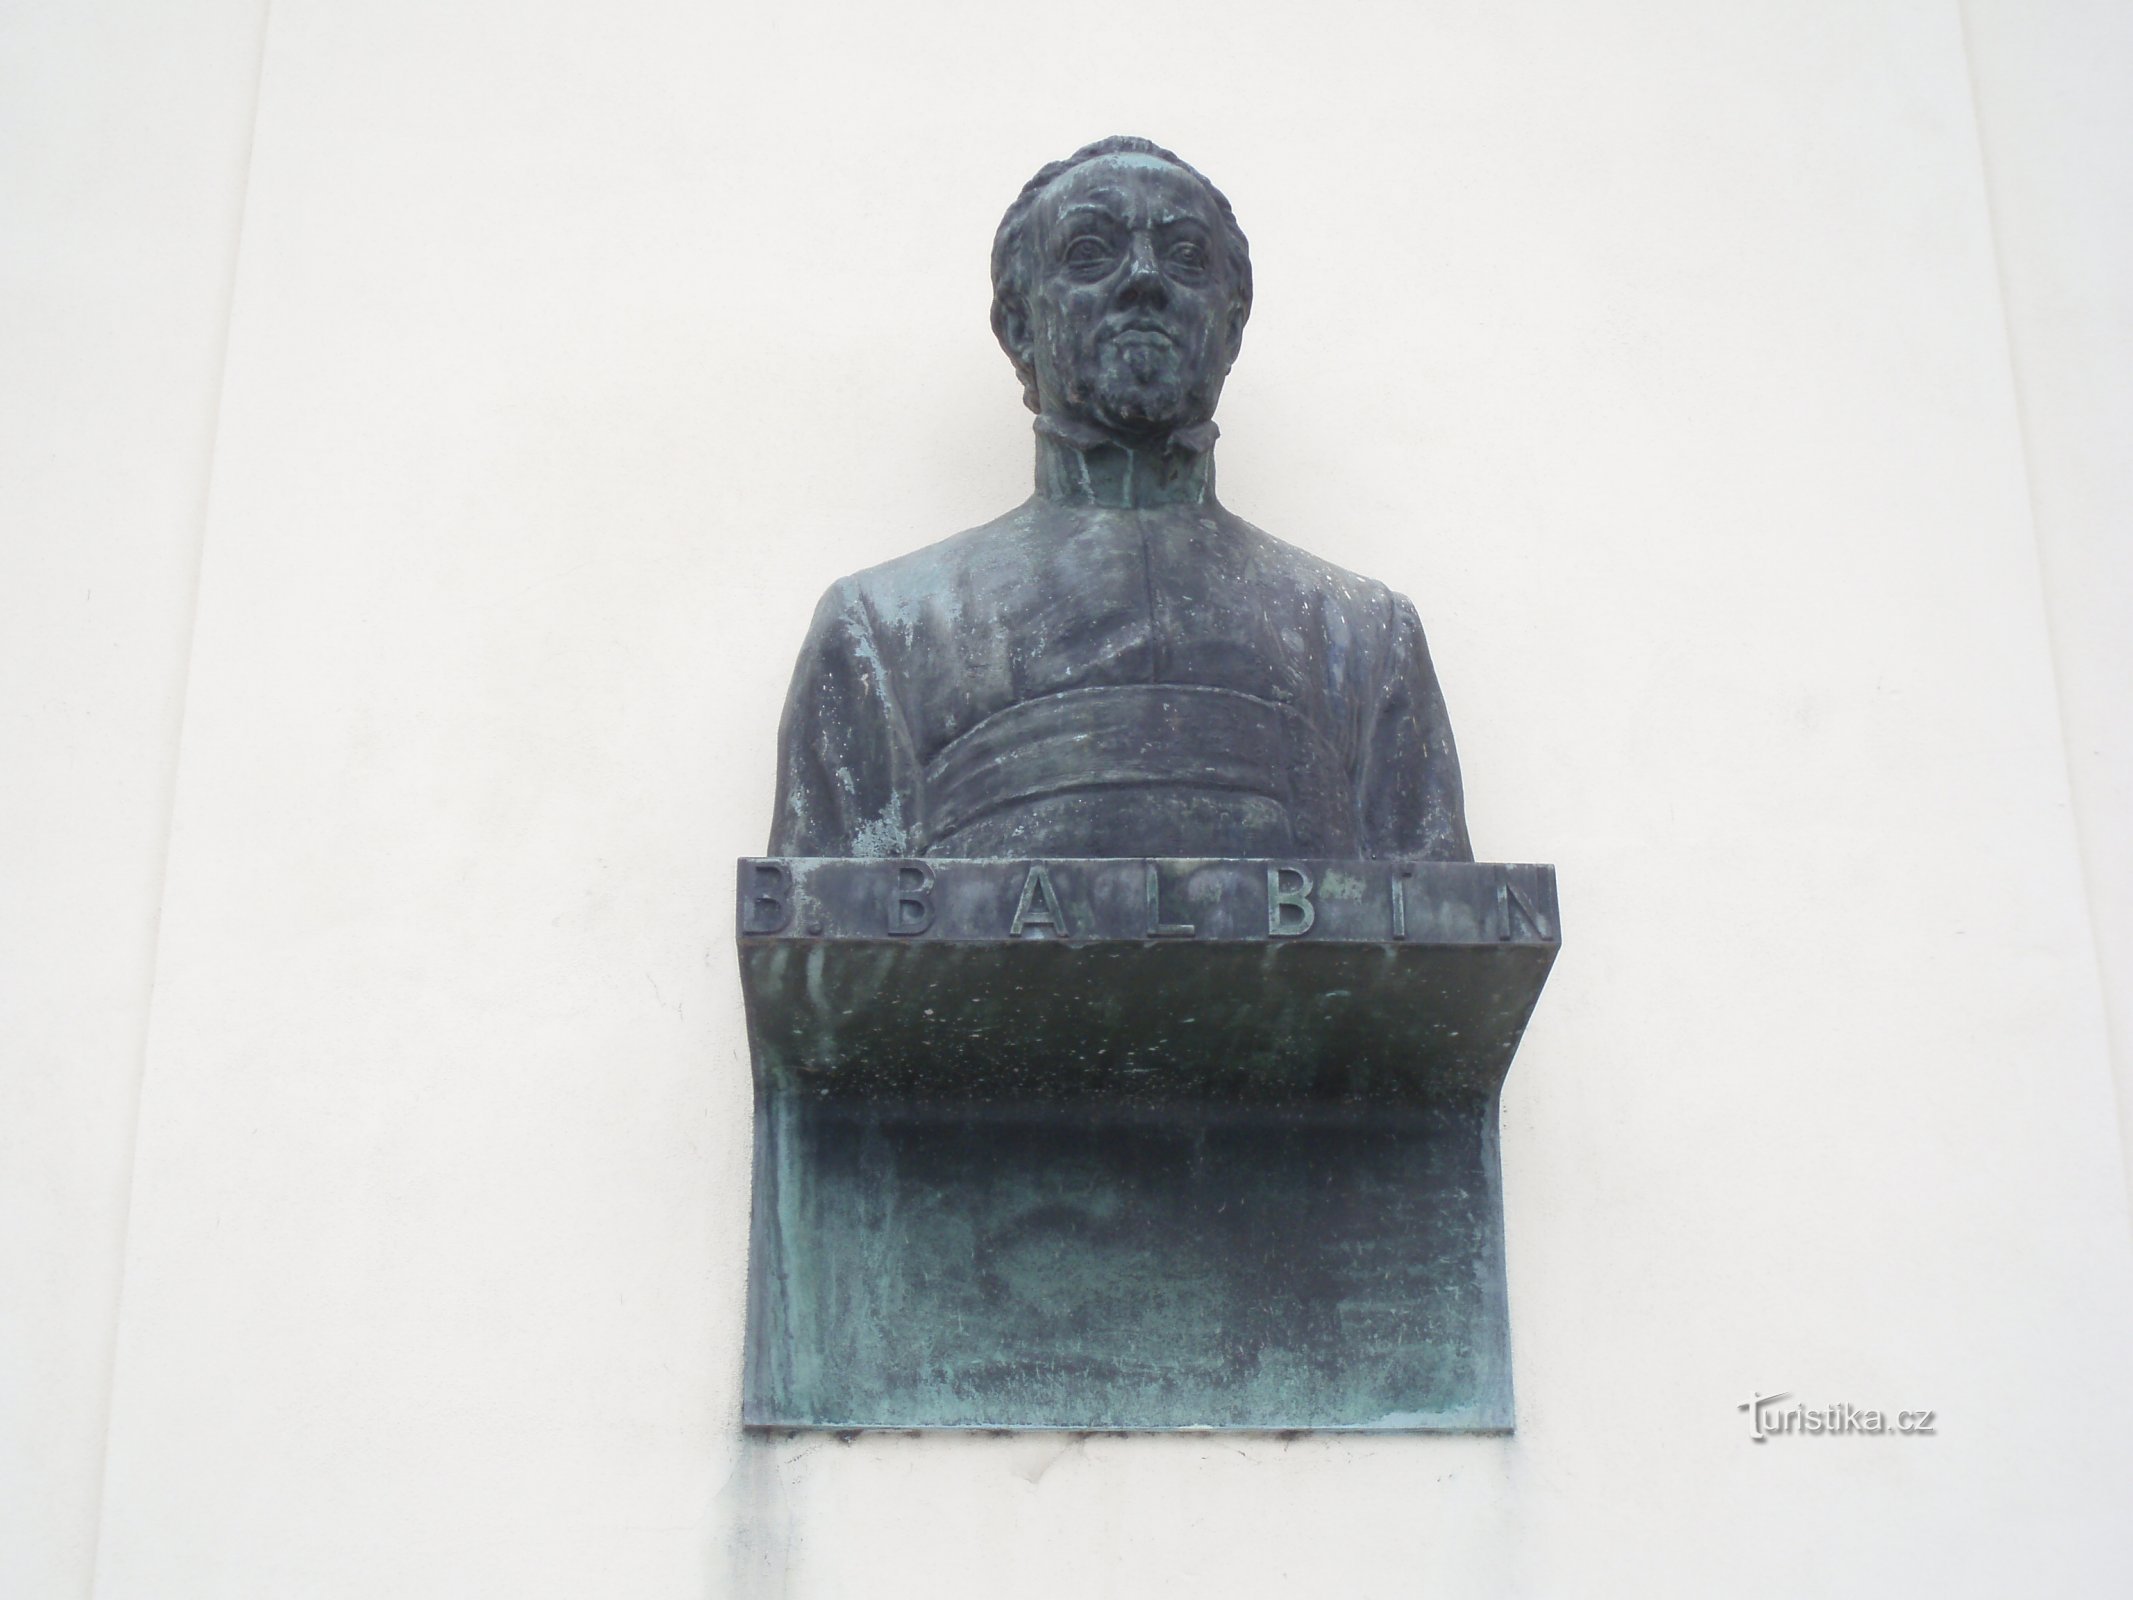 Pomník Bohuslavu Balbínovi (Hradec Králové)